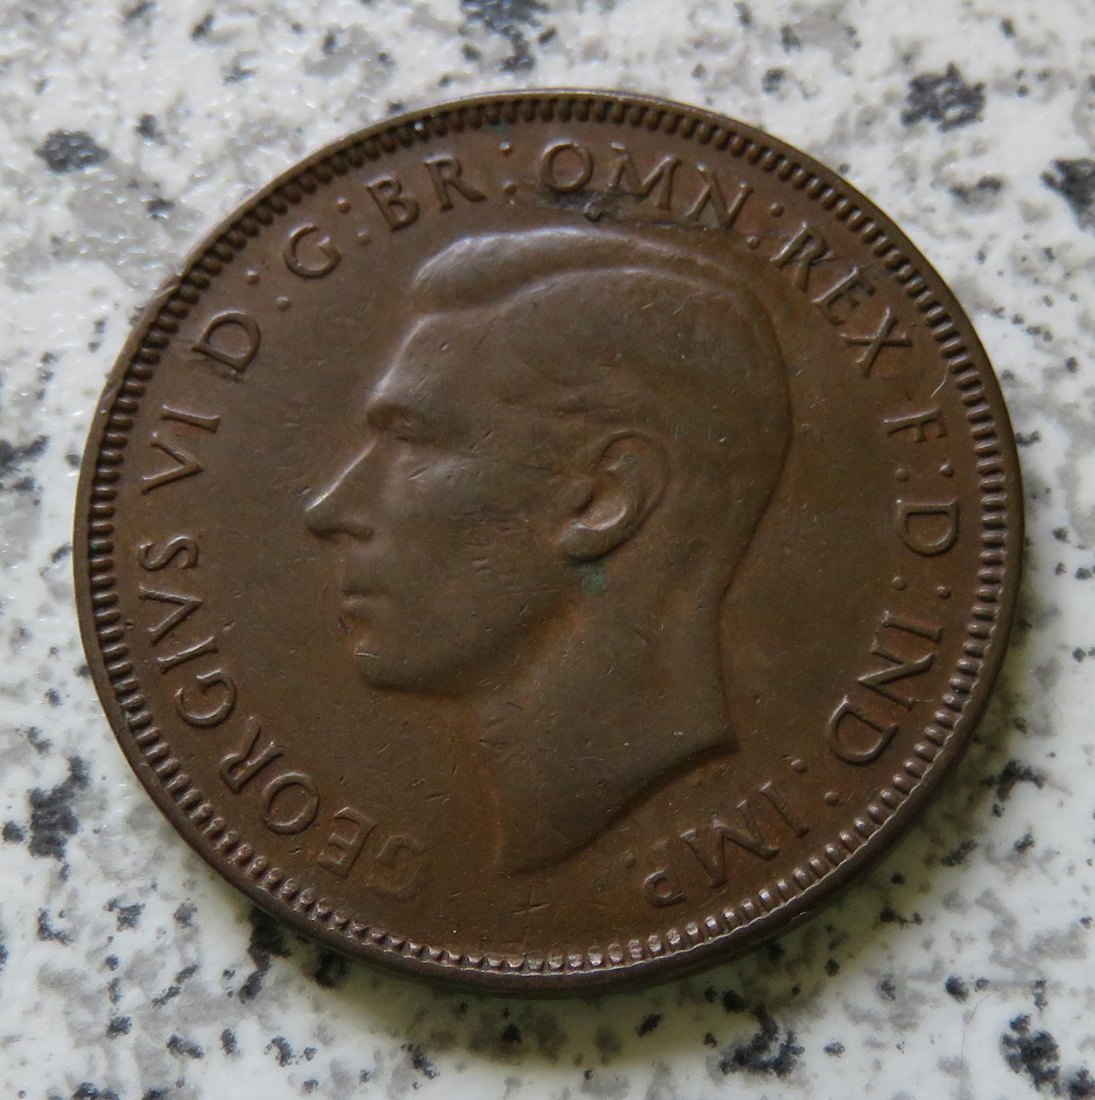  Australien half Penny 1941   